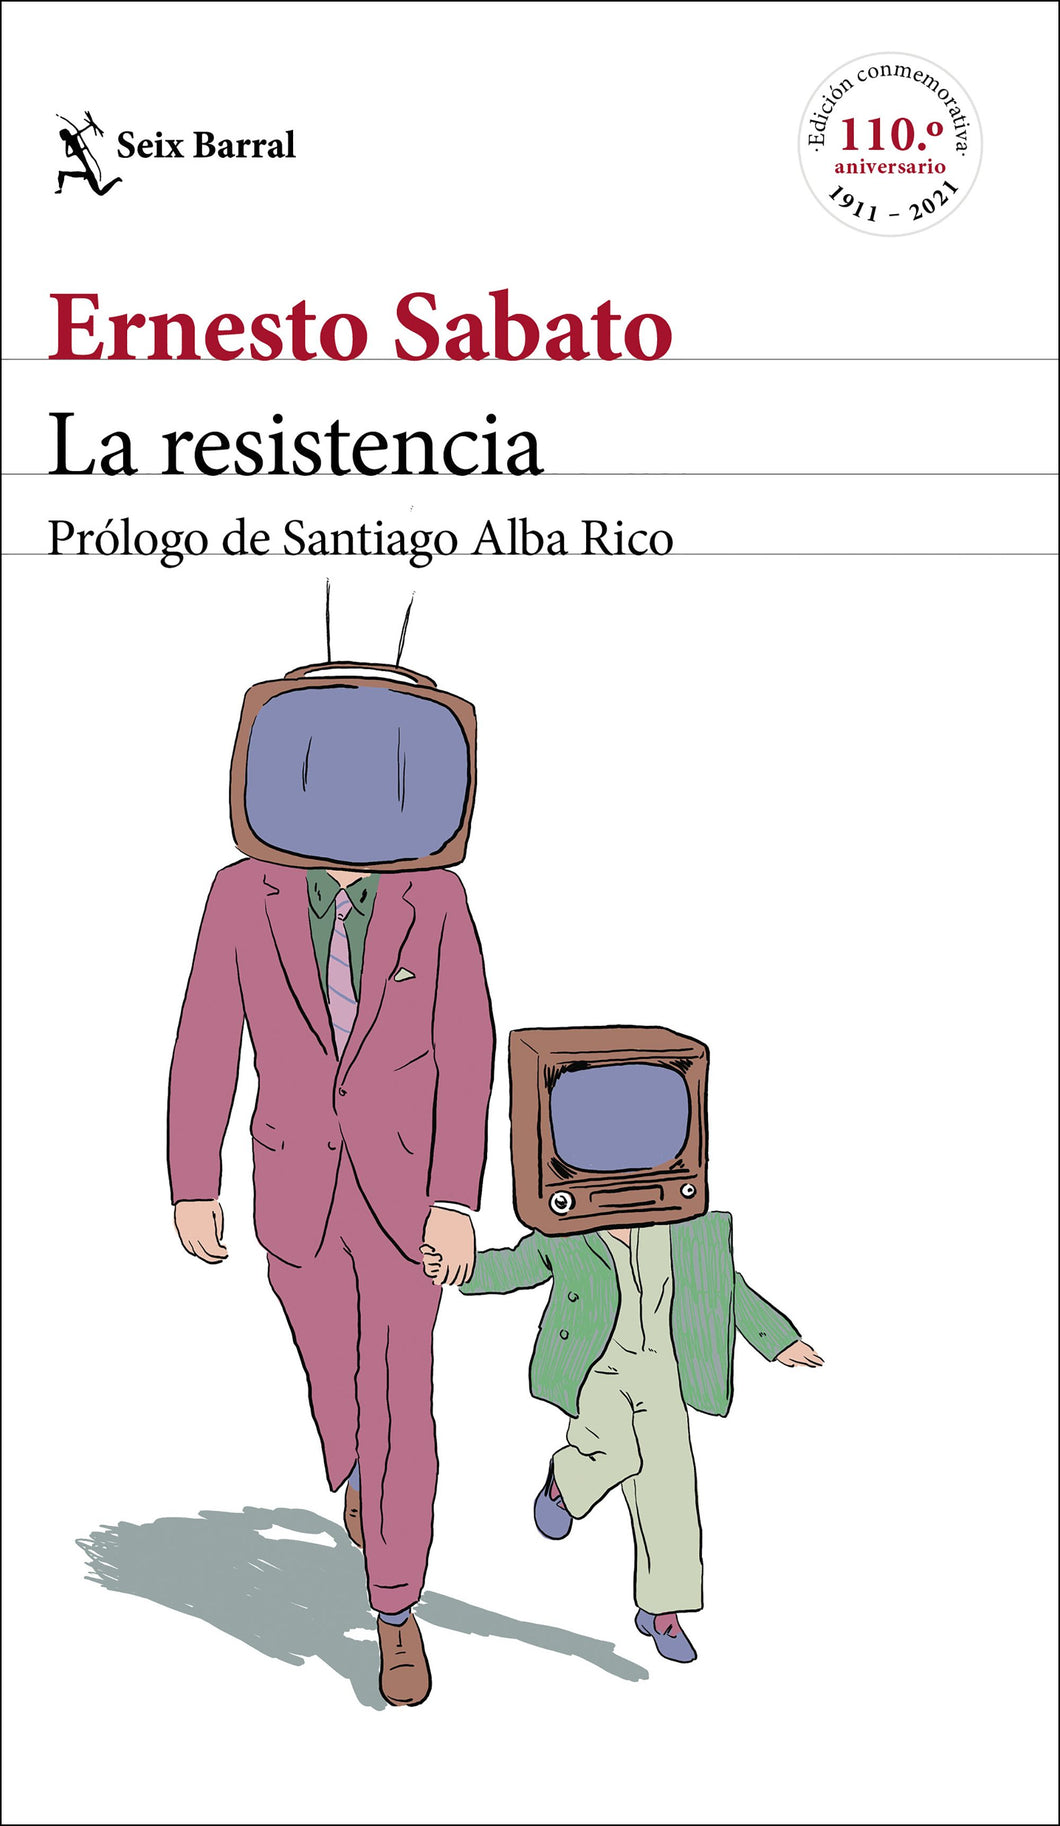 LA RESISTENCIA - Ernesto Sabato